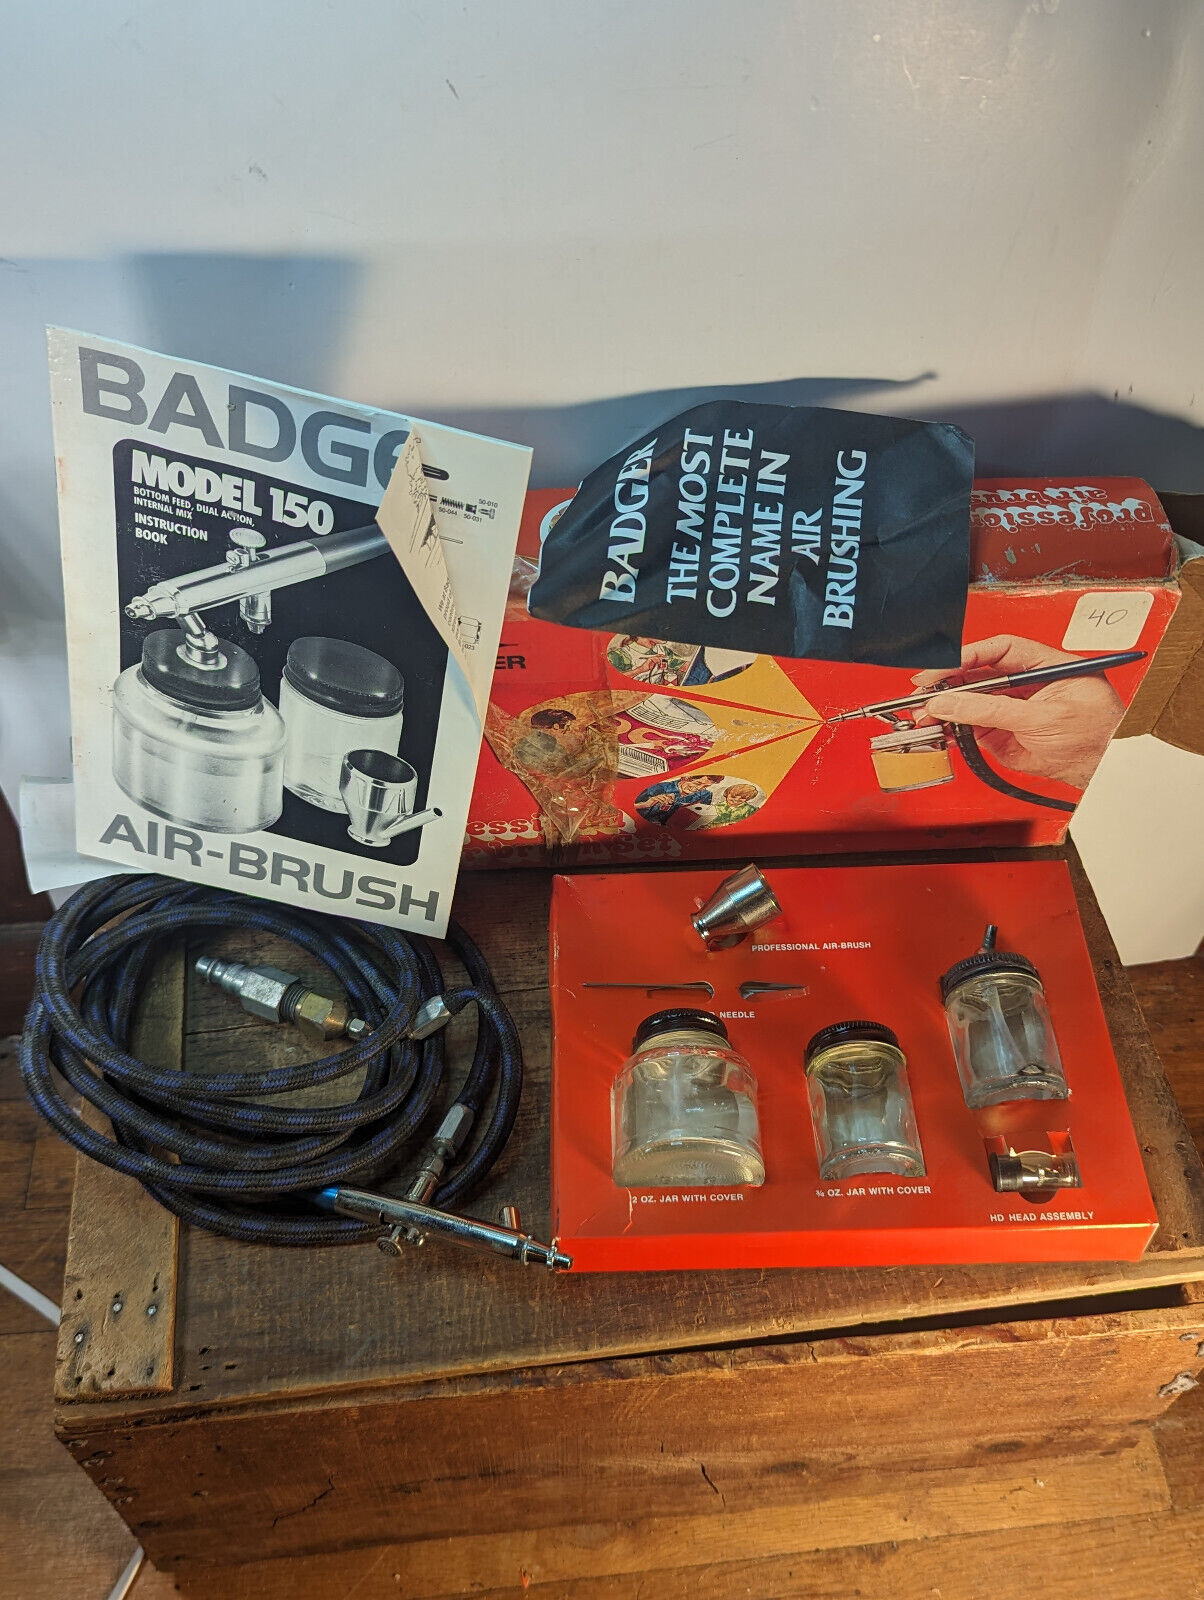 Badger Pro Air Brush Kit - 150-4